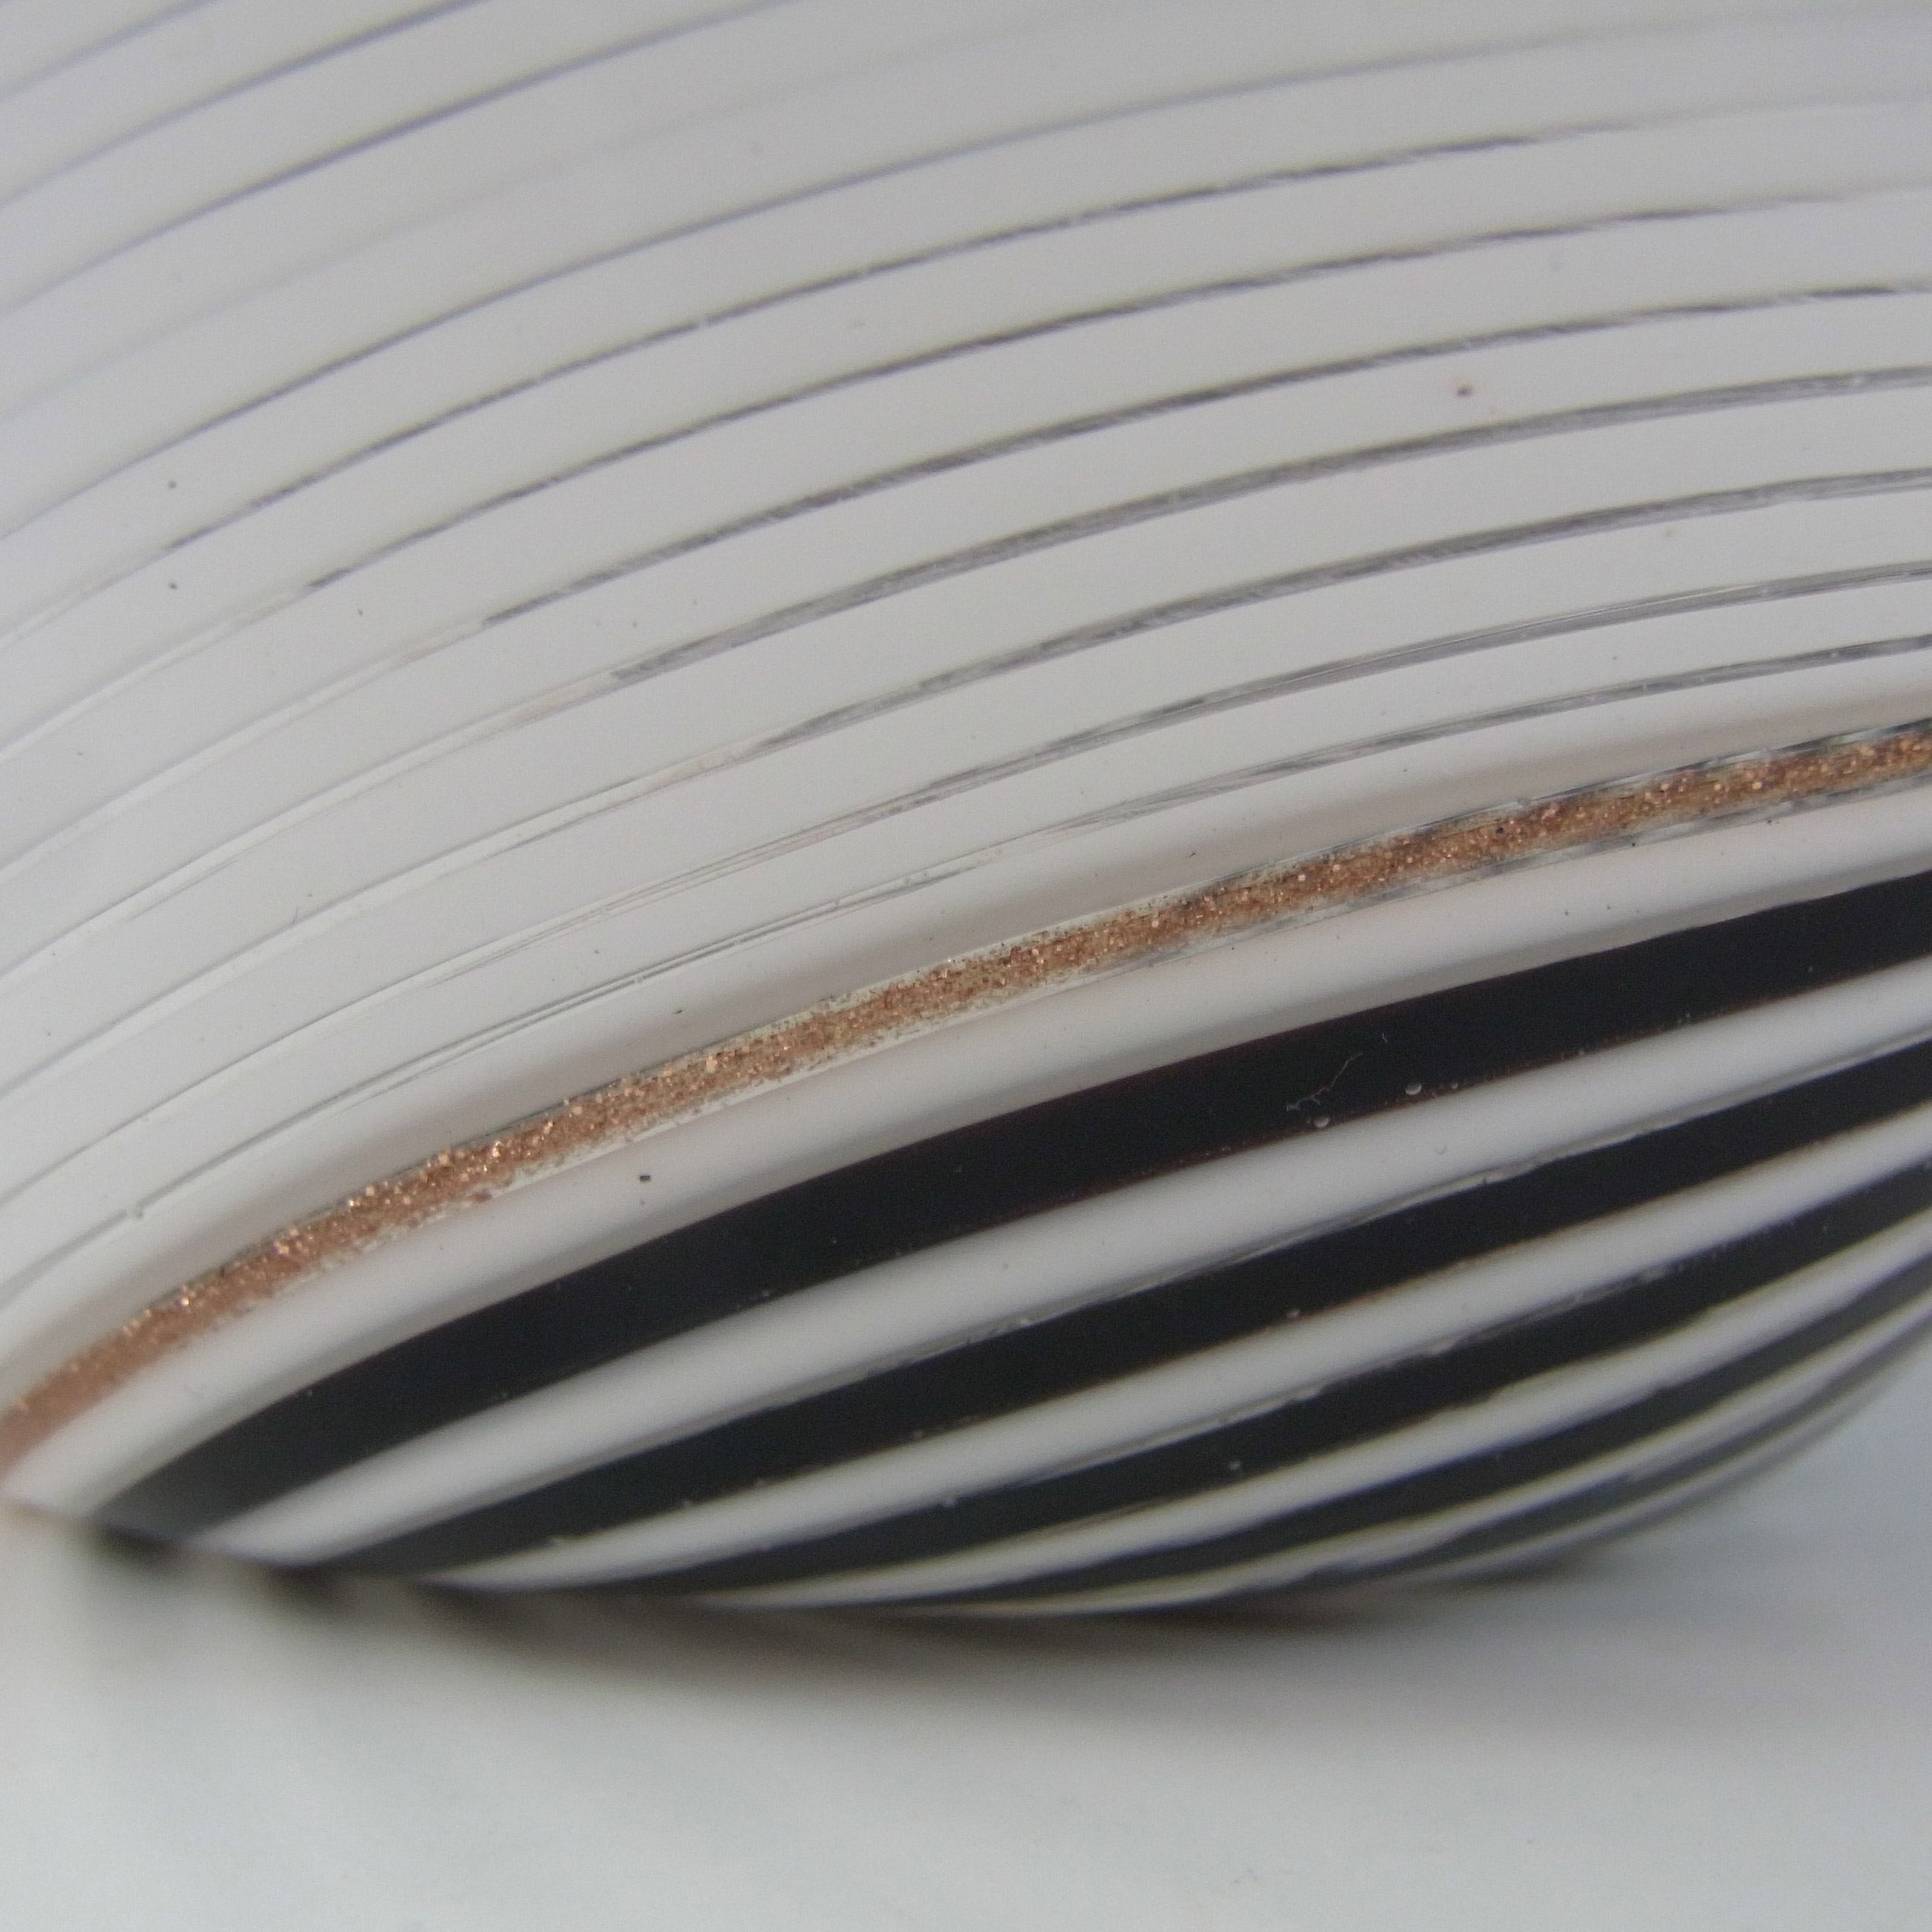 (image for) Aureliano Toso / Dino Martens Mezza Filigrana Glass Bowl #5266 - Click Image to Close